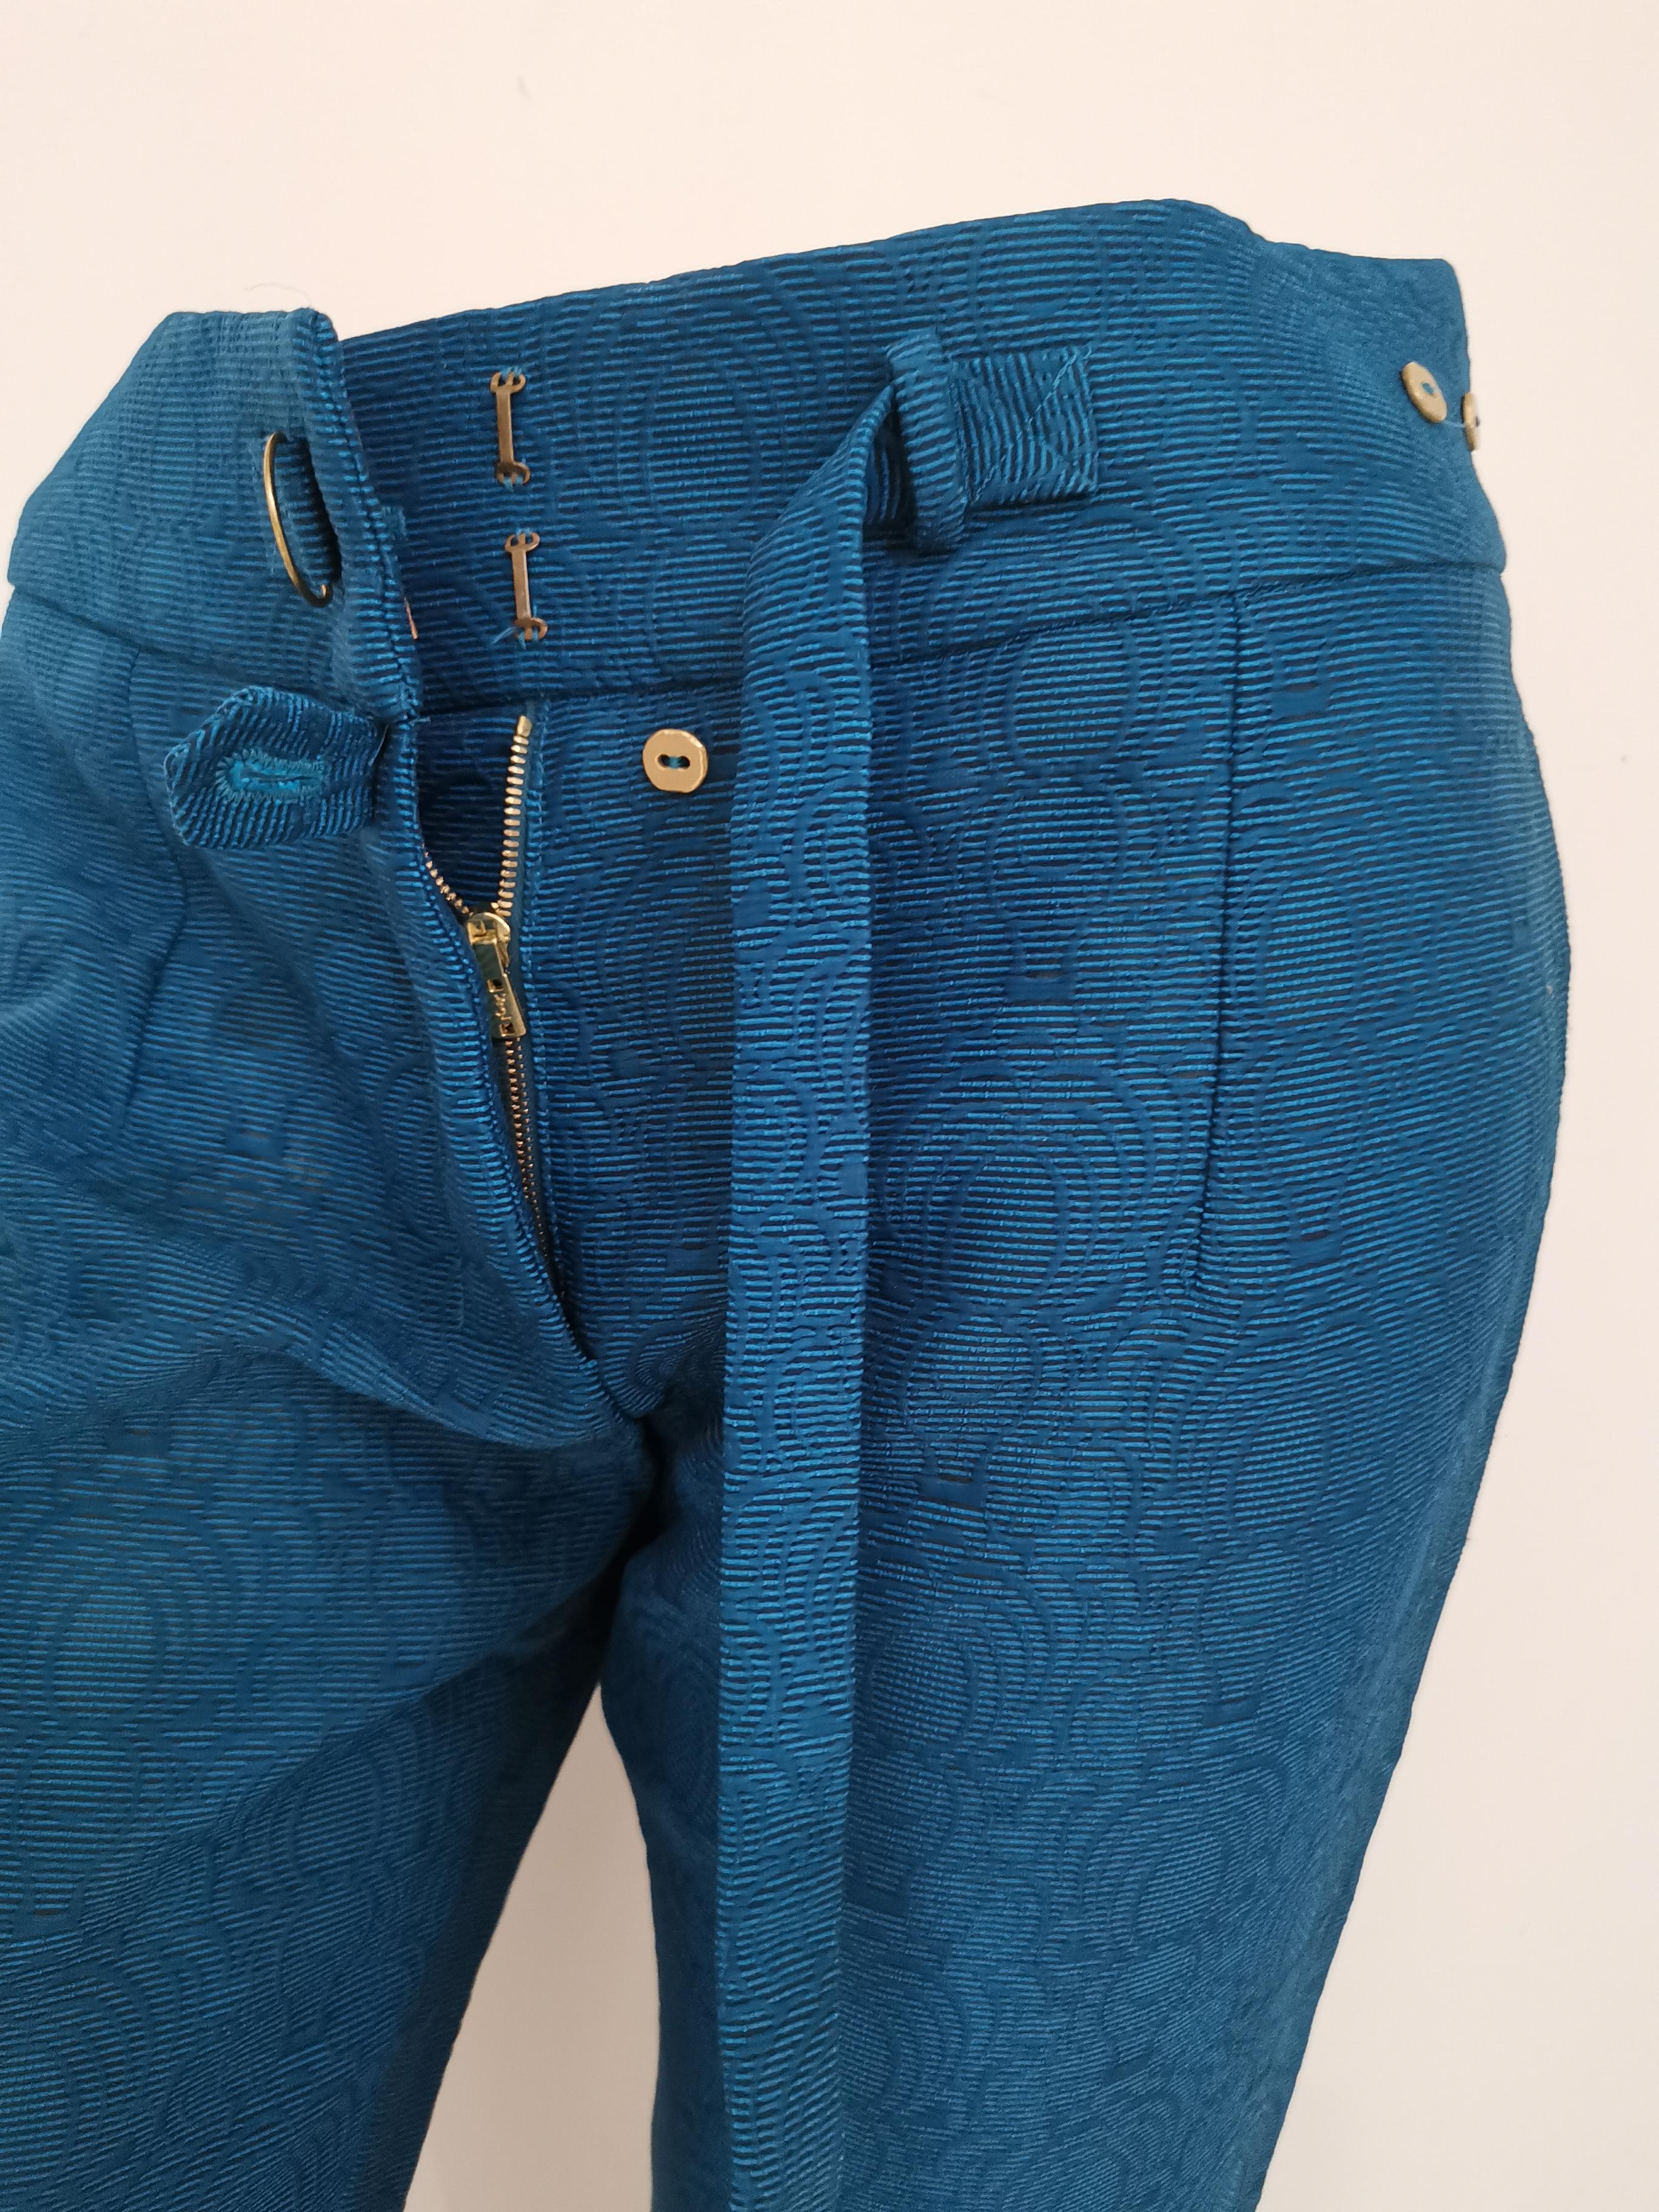 2012 Yves Saint Laurent blu pants NWOT For Sale 3